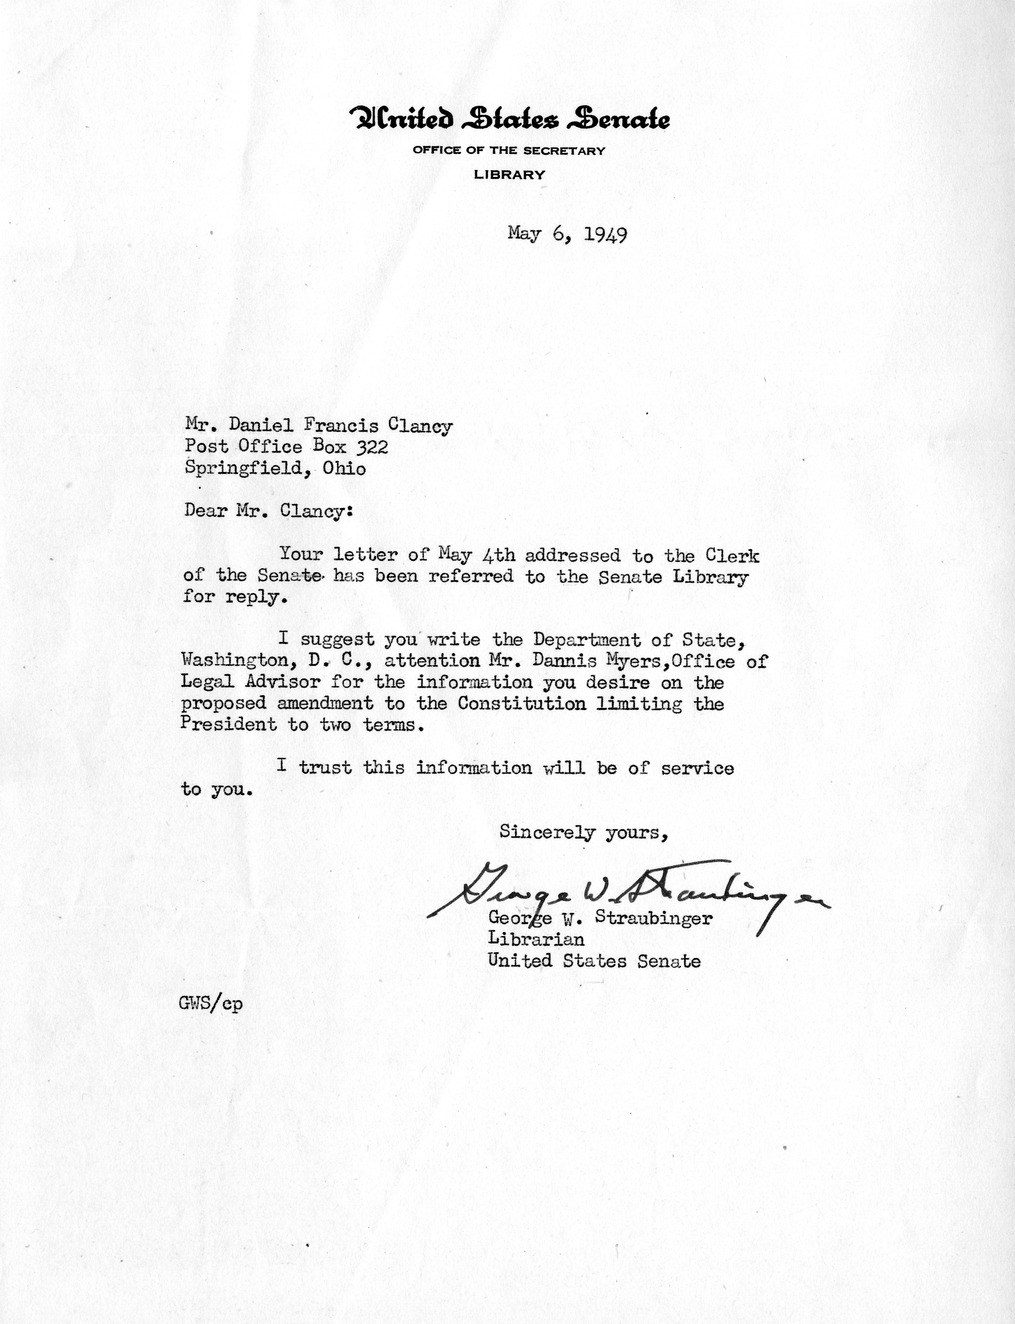 Letter from George W. Straubinger to Daniel F. Clancy